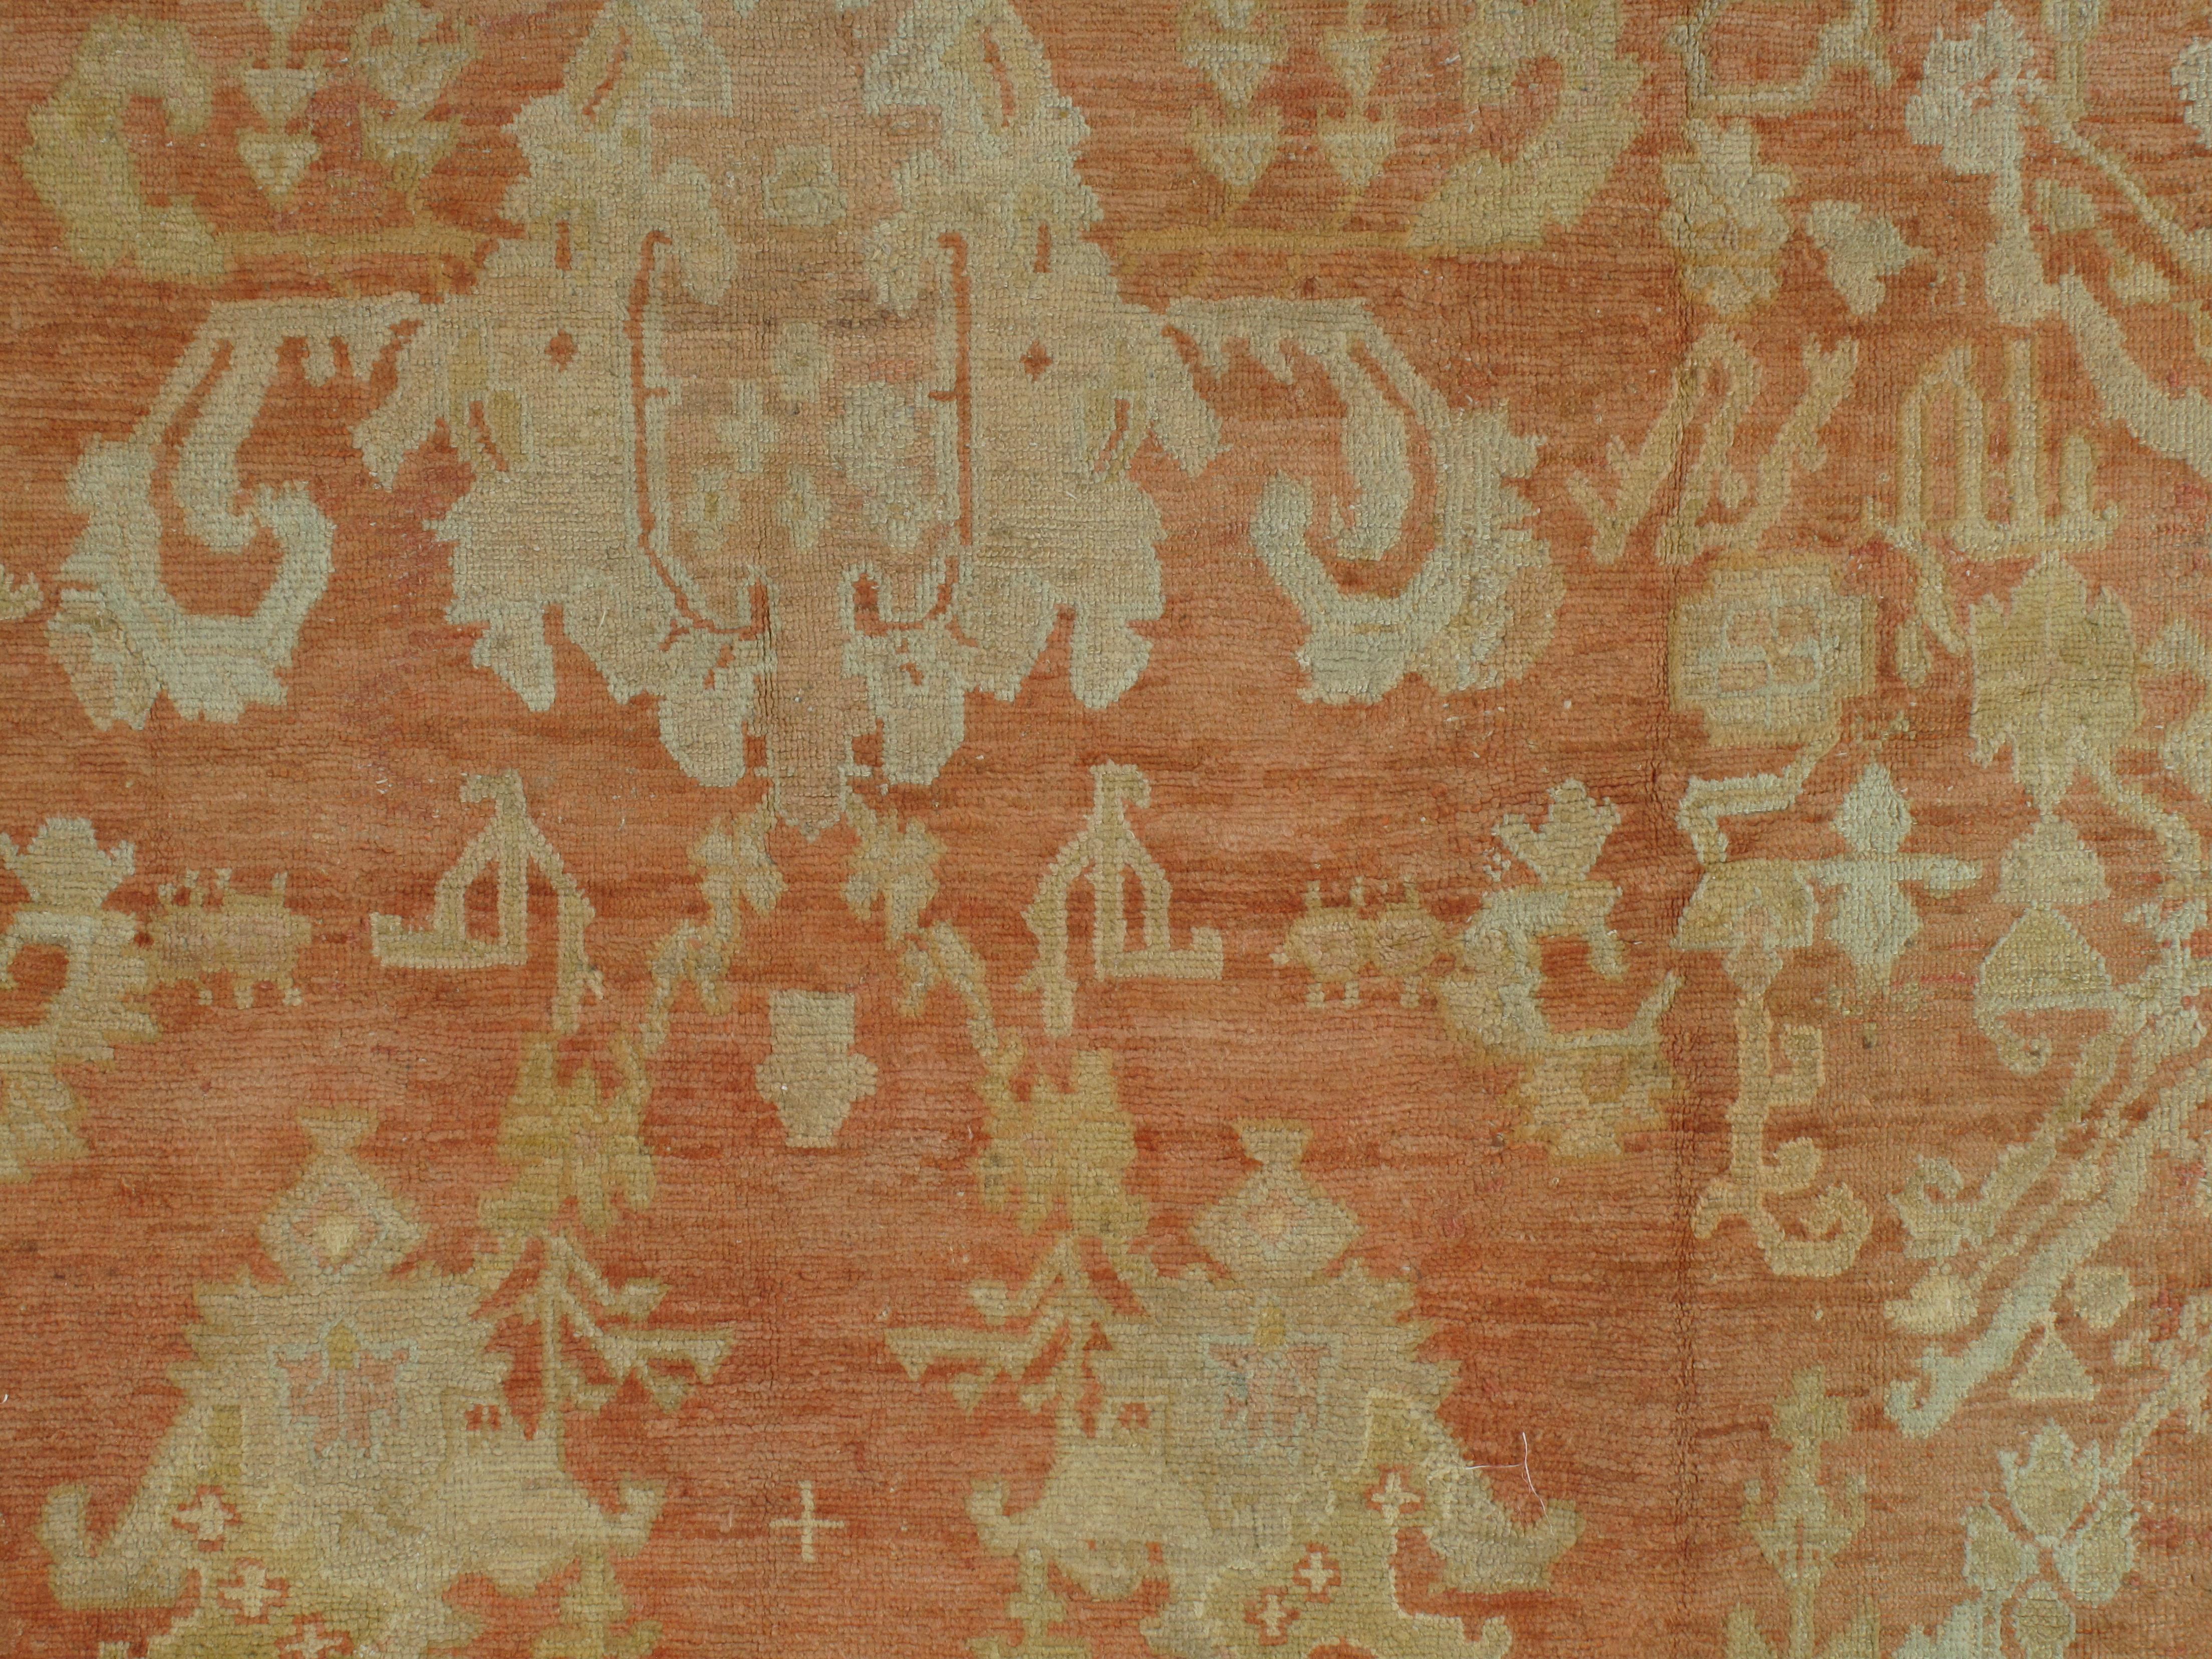 Antique Oushak Carpet, Handmade Oriental Rug, Coral Field, Gold, Ivory Border For Sale 2